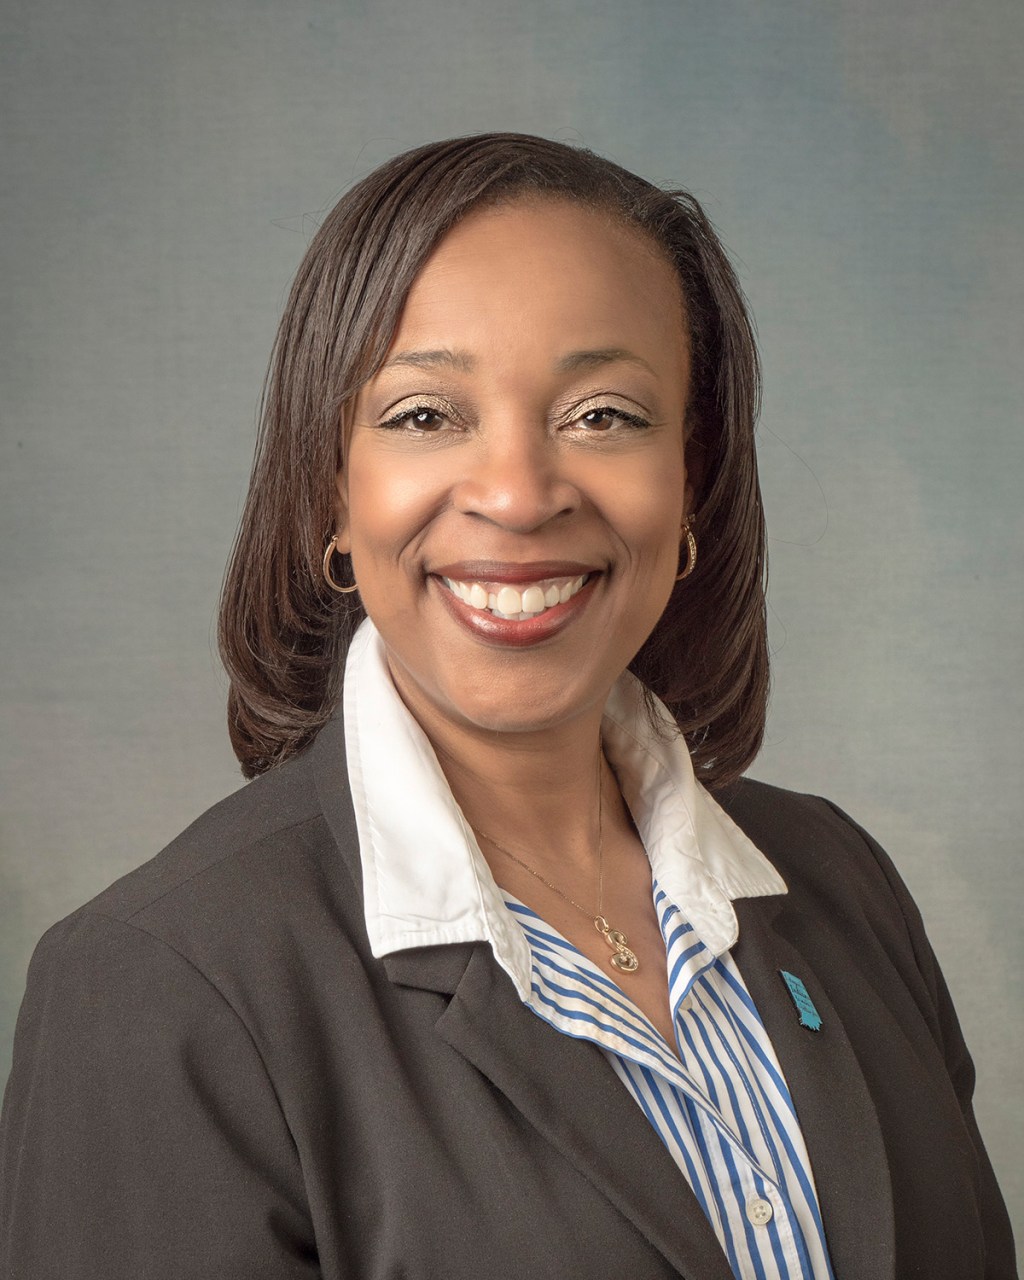 Sharon Tucker to become first Black mayor of Fort Wayne, Indiana